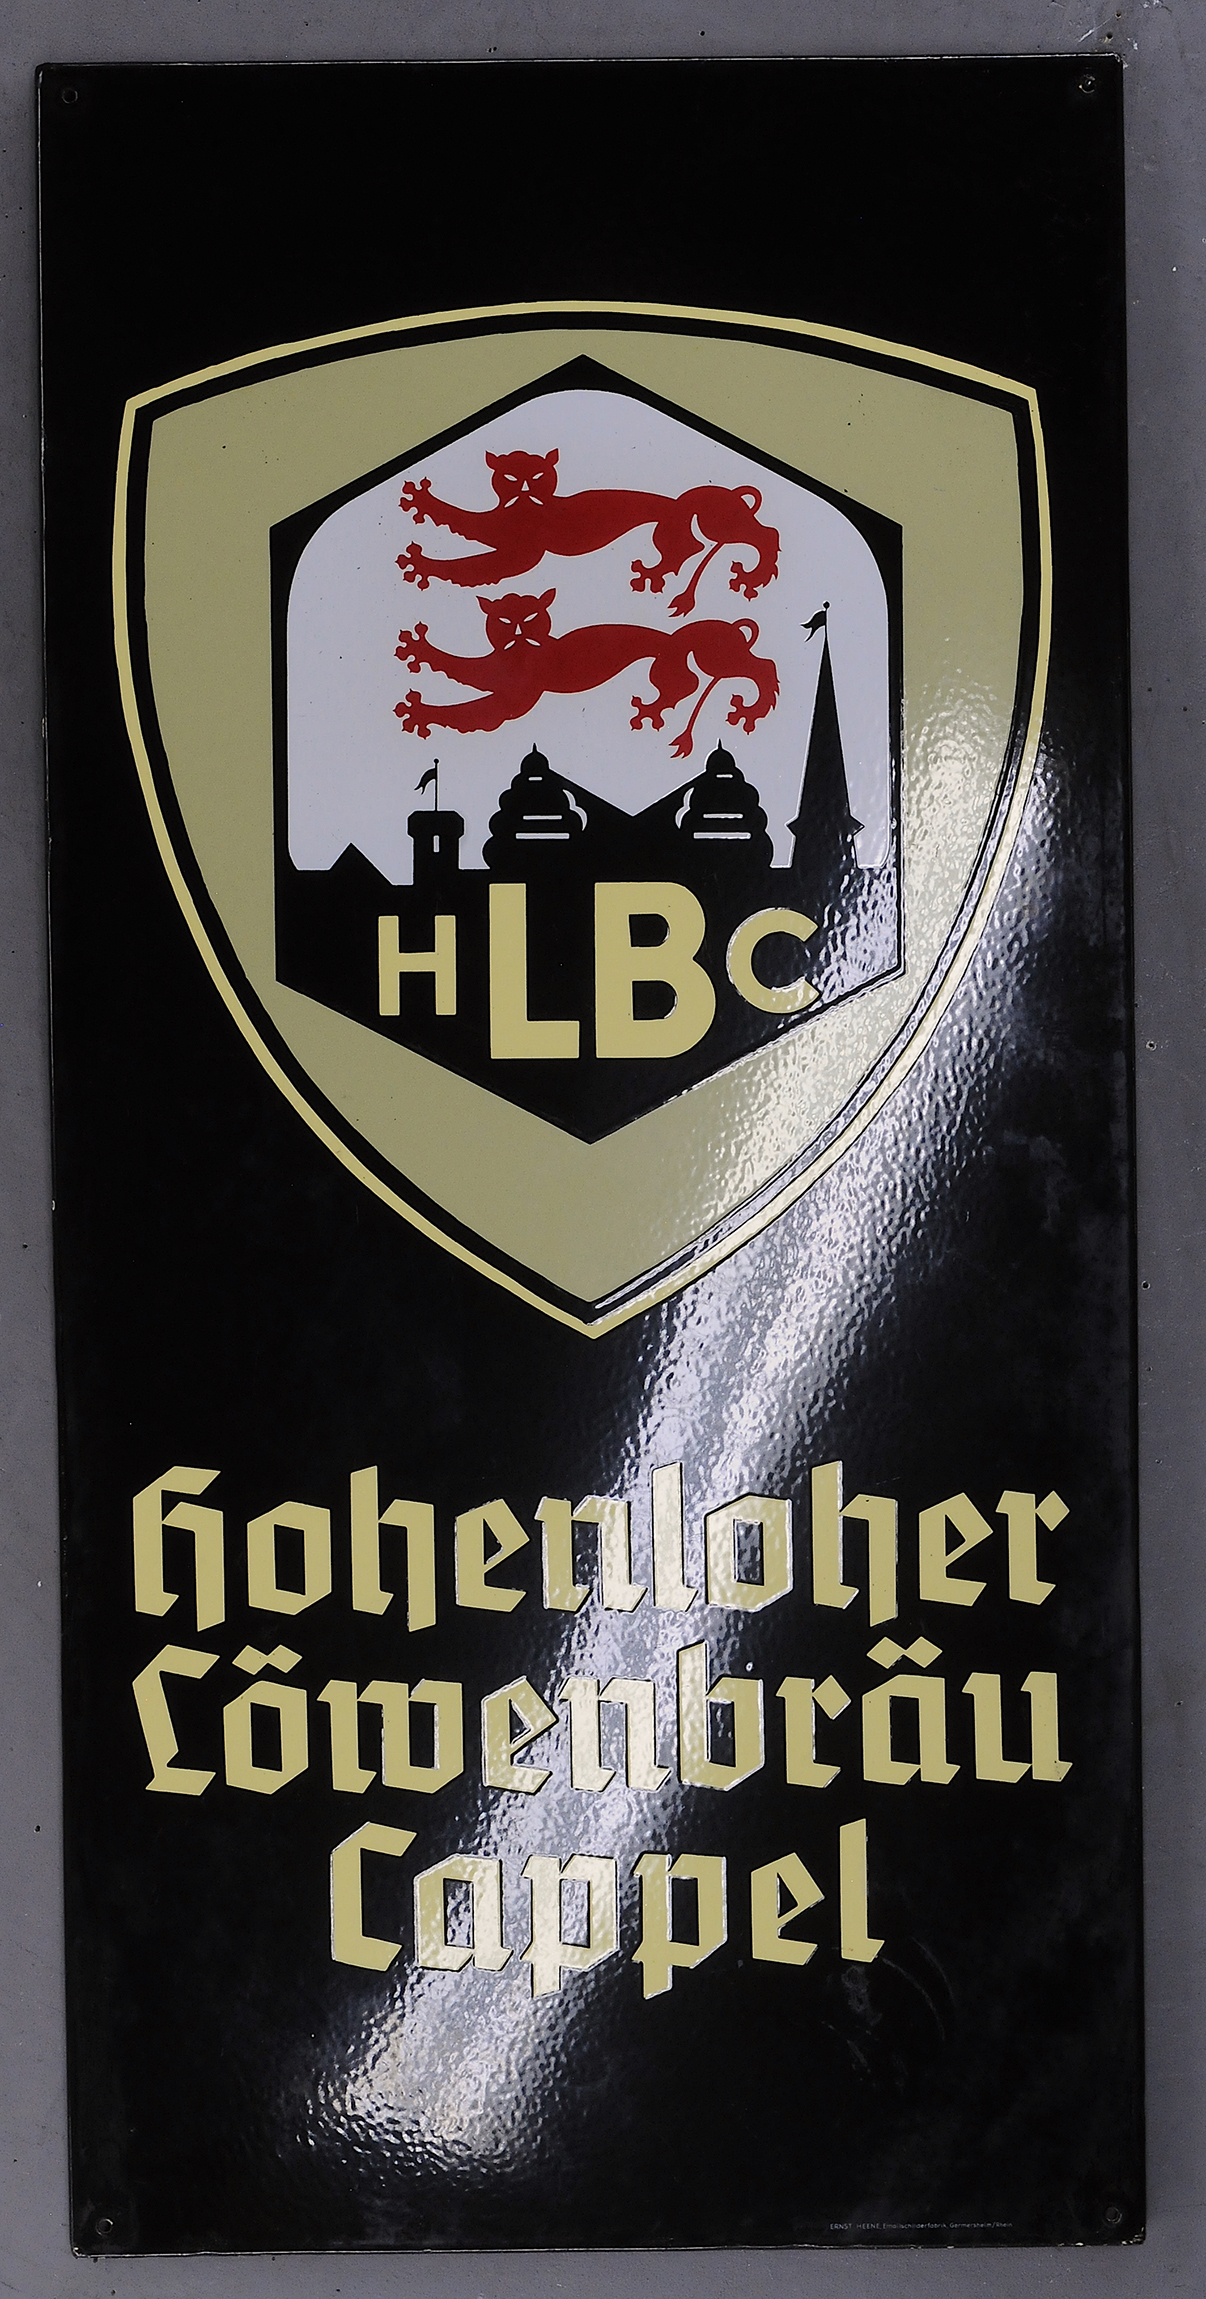 Hohenloher Löwenbrauerei - Image 3 of 3